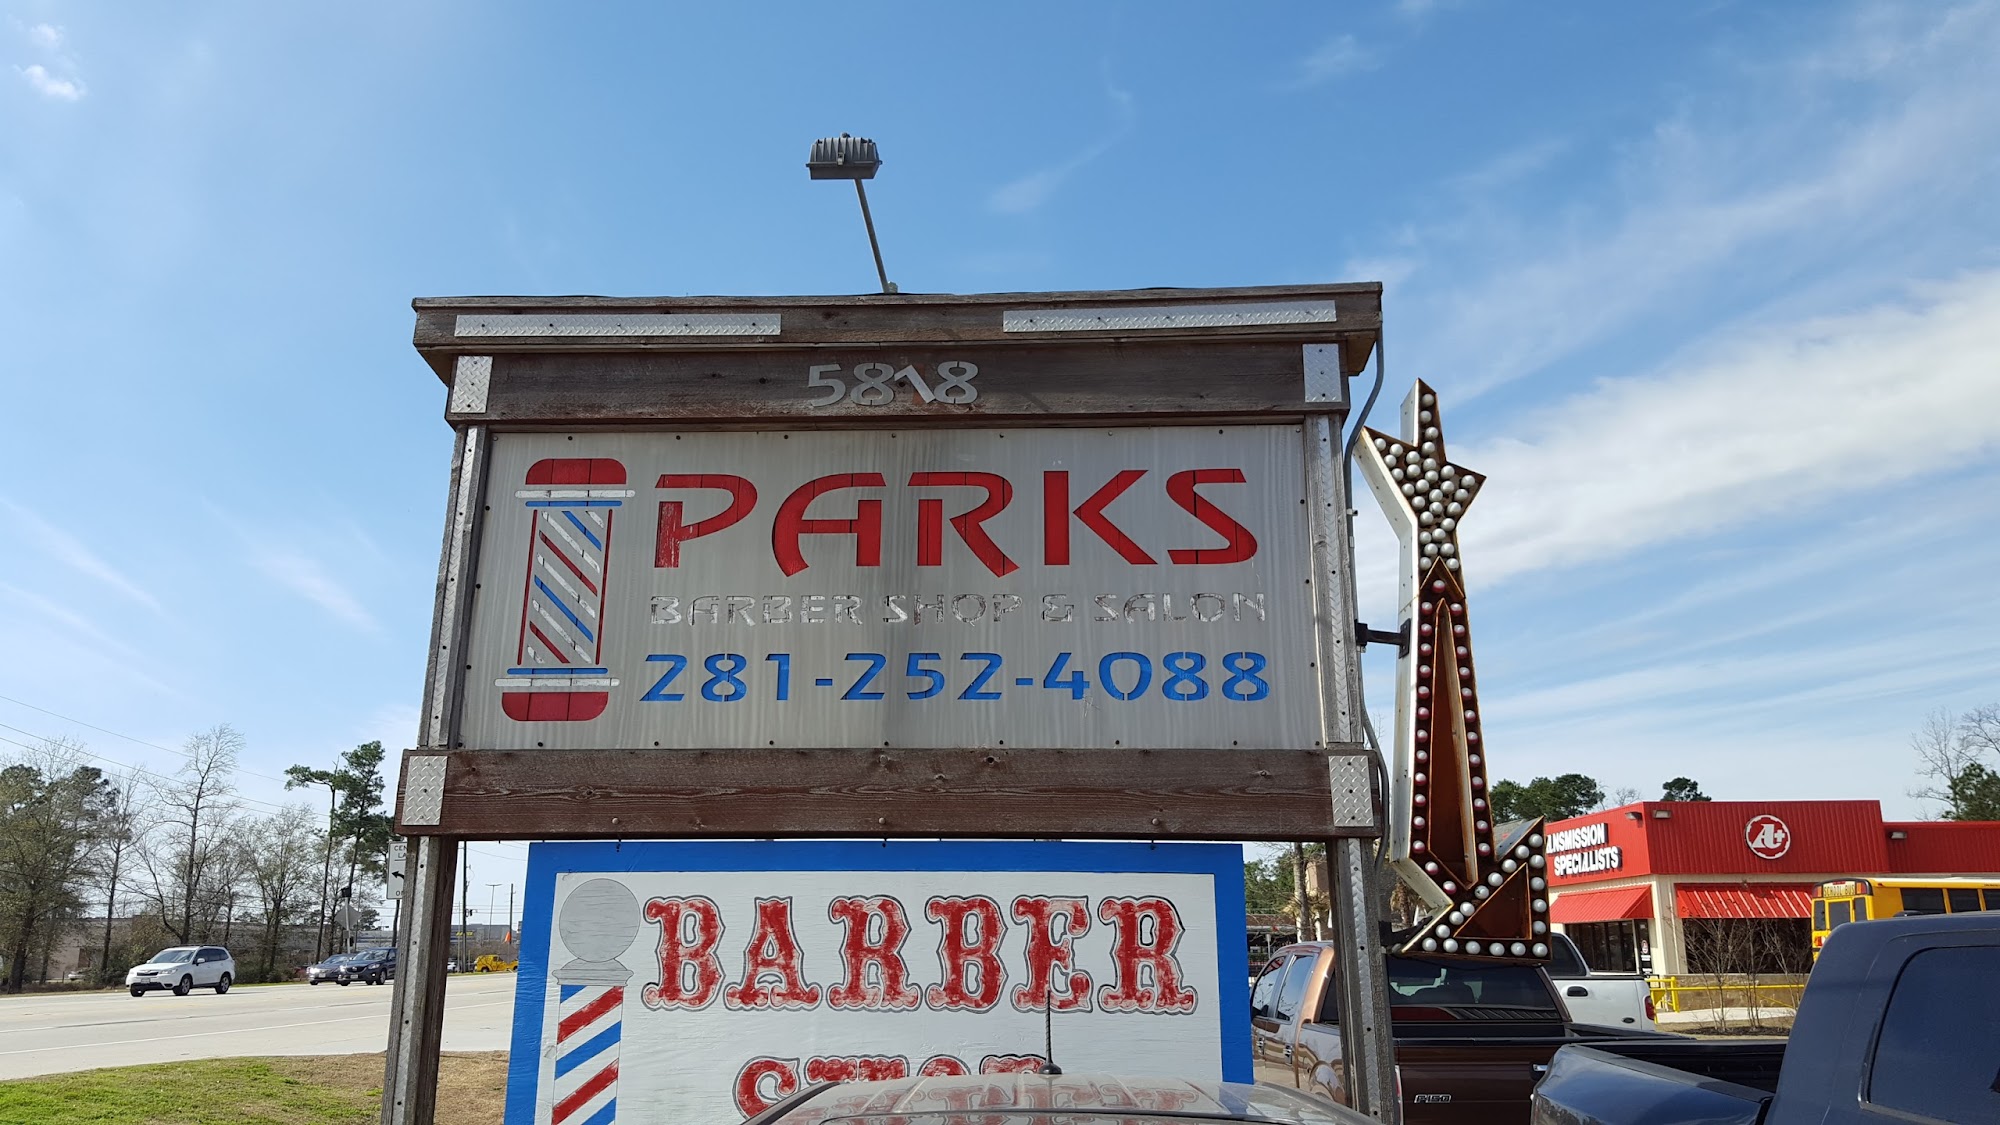 Parks Barbershop & Salon